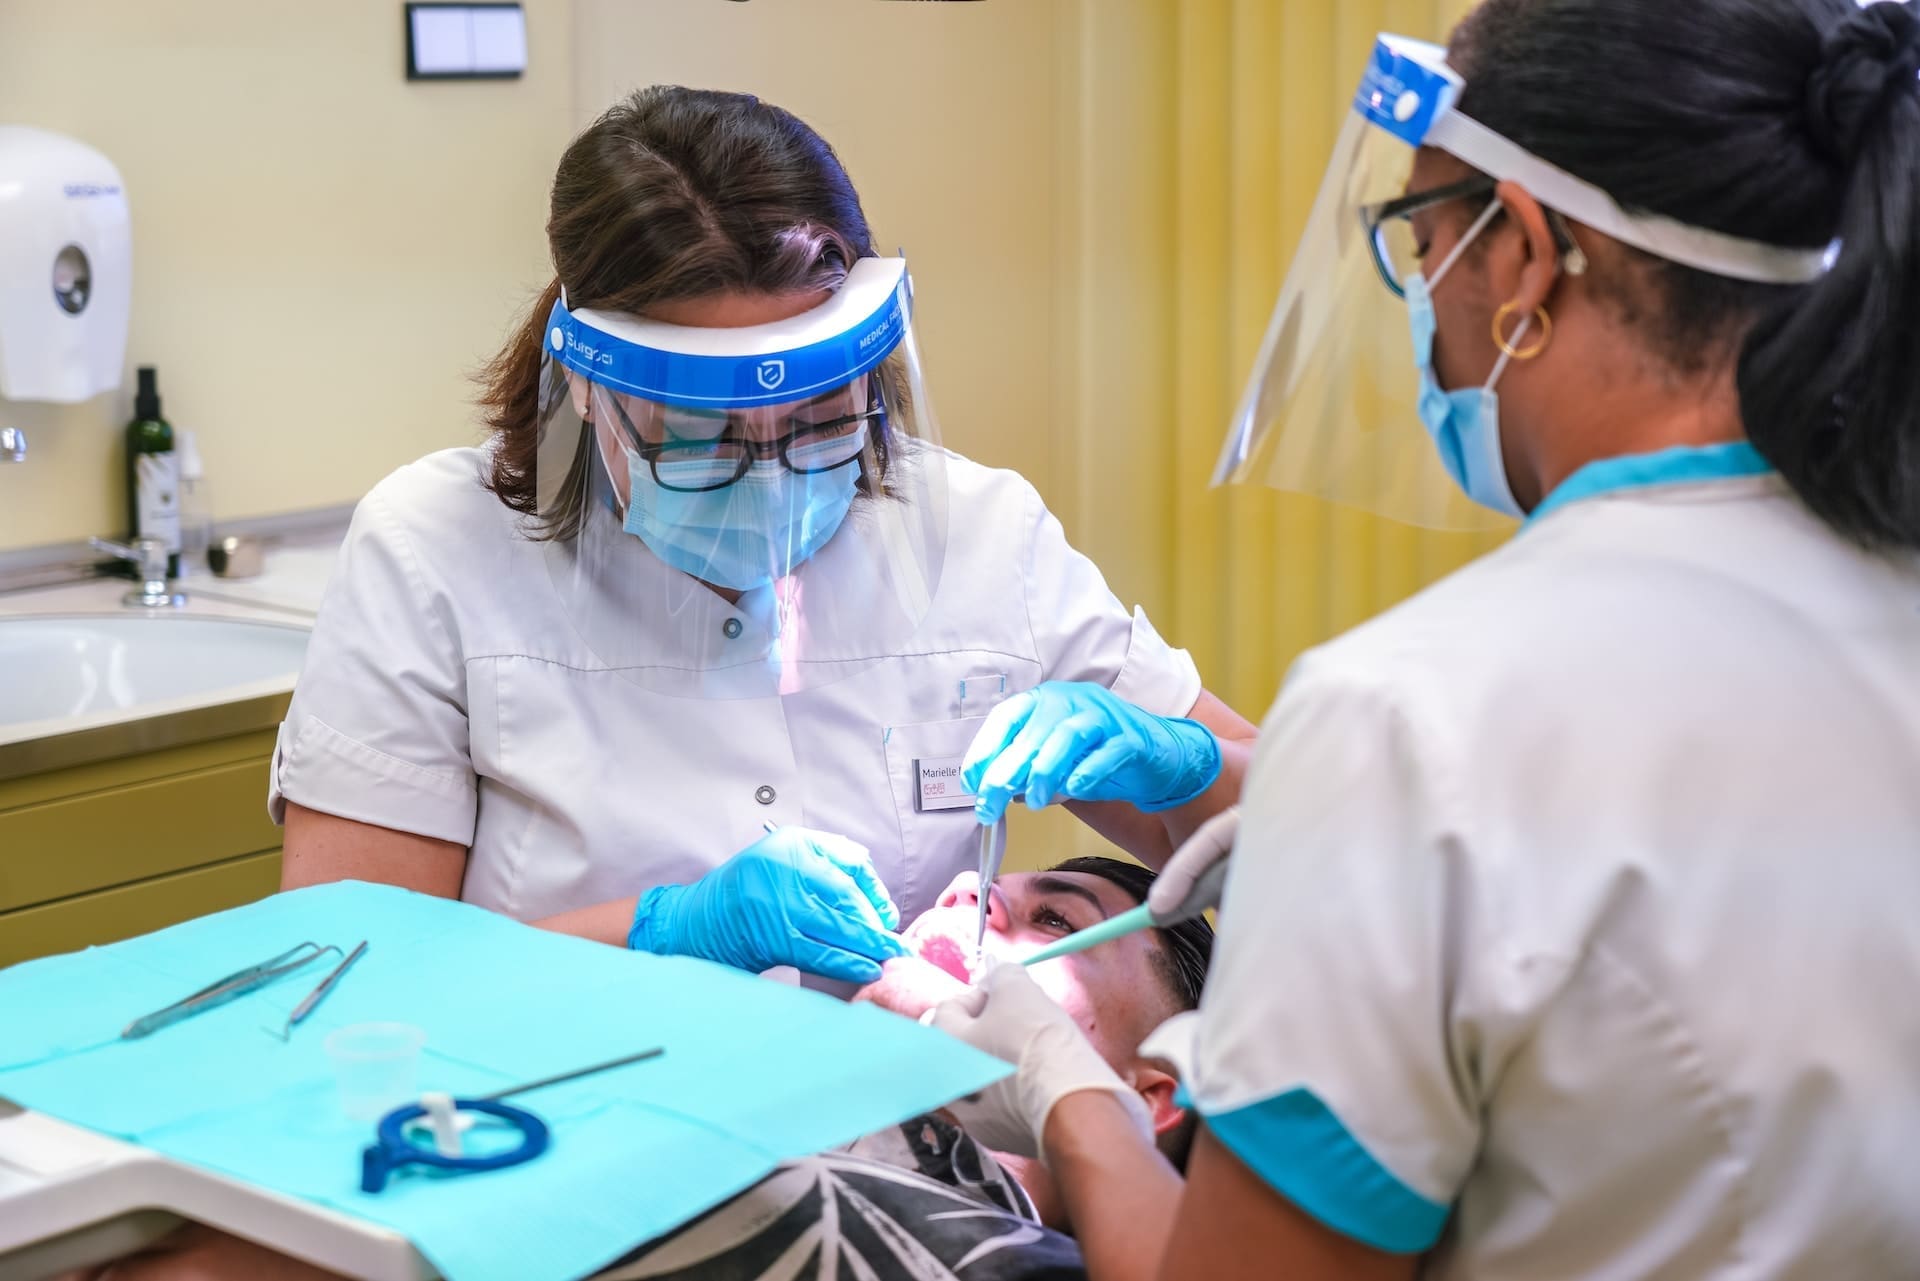 Patient undergoing dental implant surgery